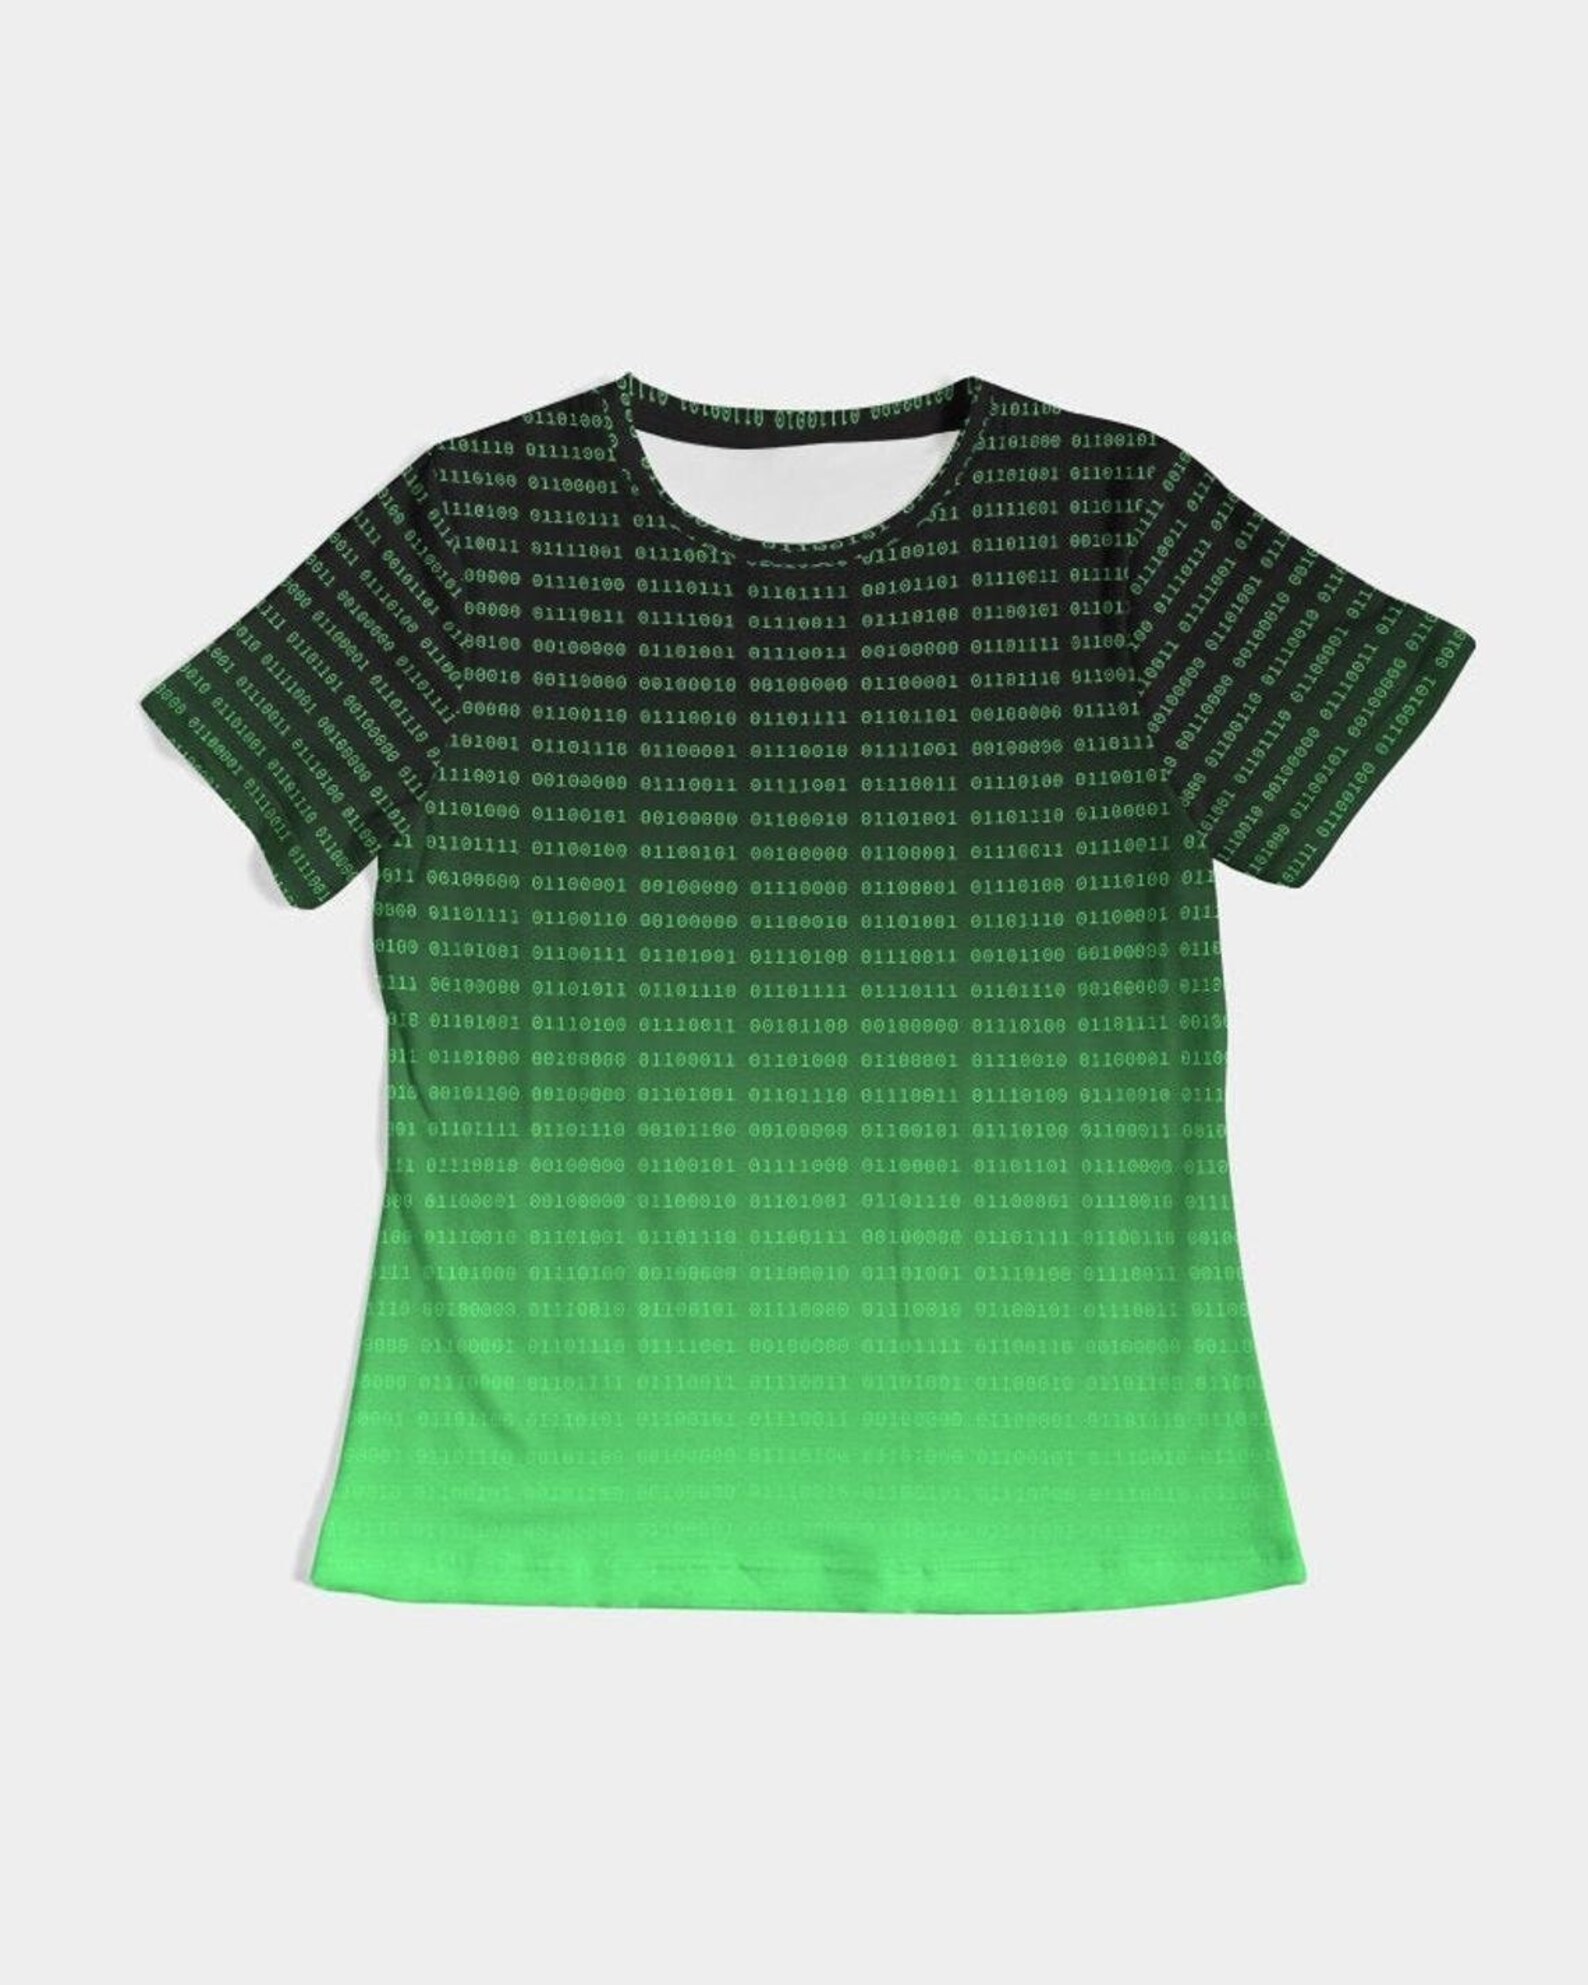 Programmer Gift Tee Coding T Shirt Programmer Tshirt - Etsy UK